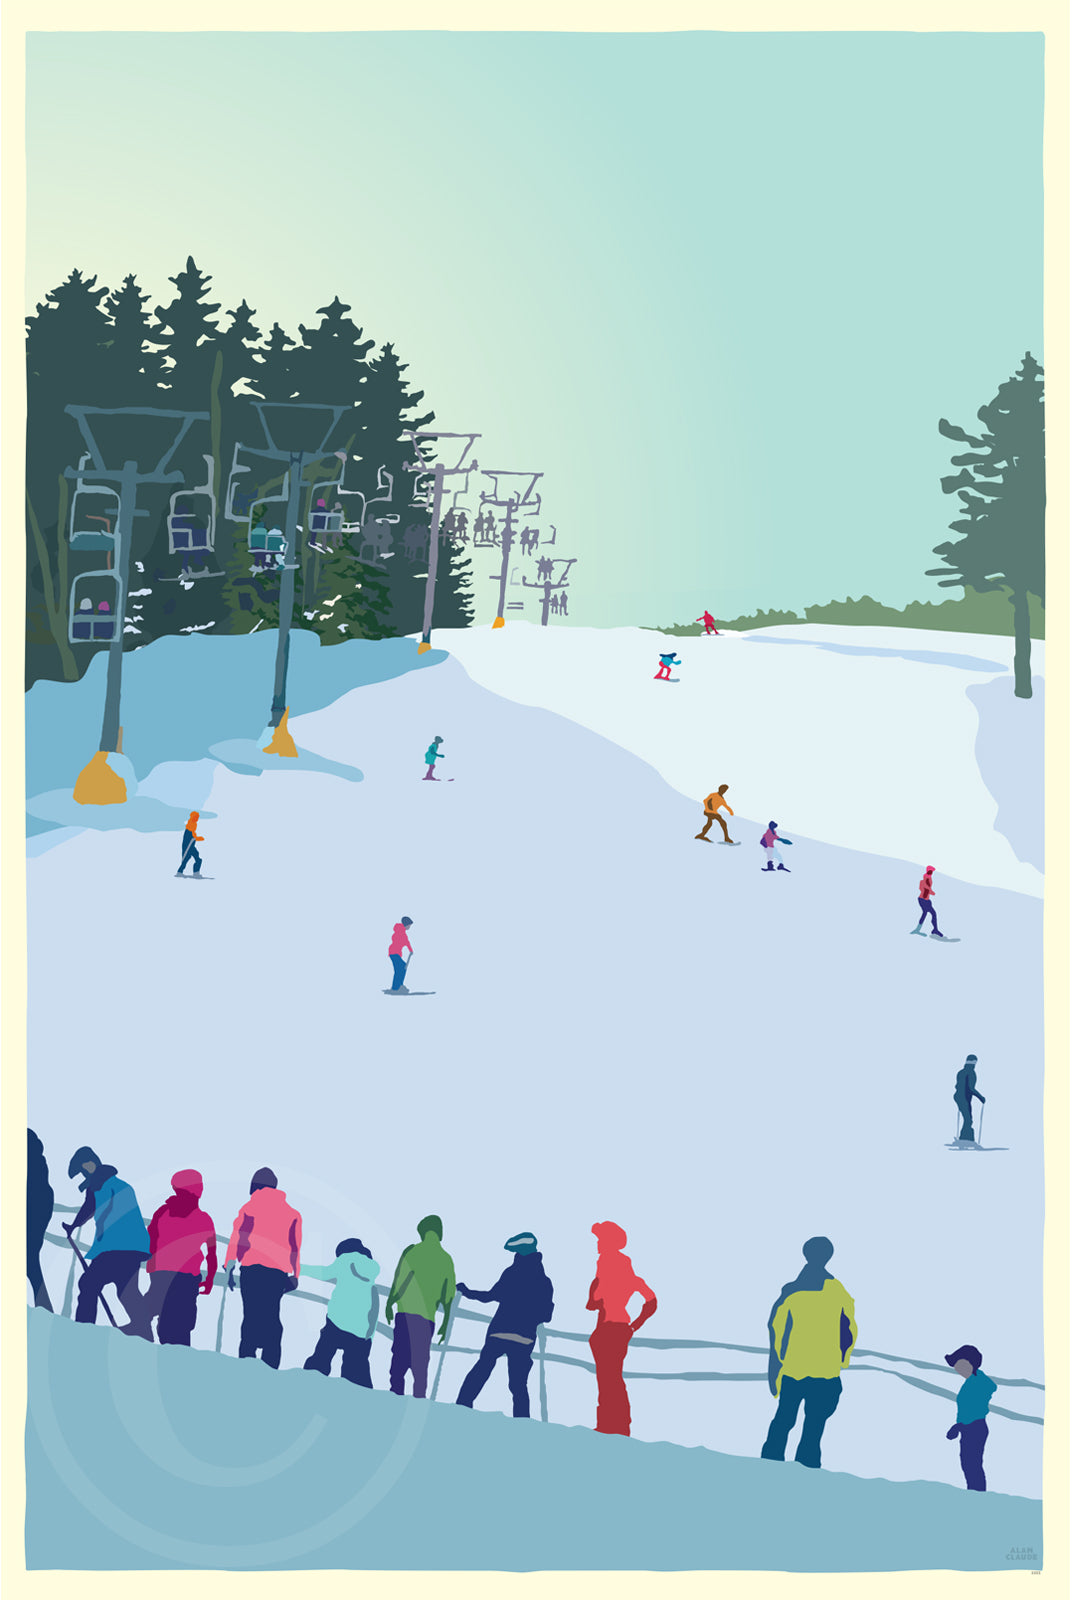 Skiing Snow Bowl Art Print 24" x 36" Wall Poster - Maine